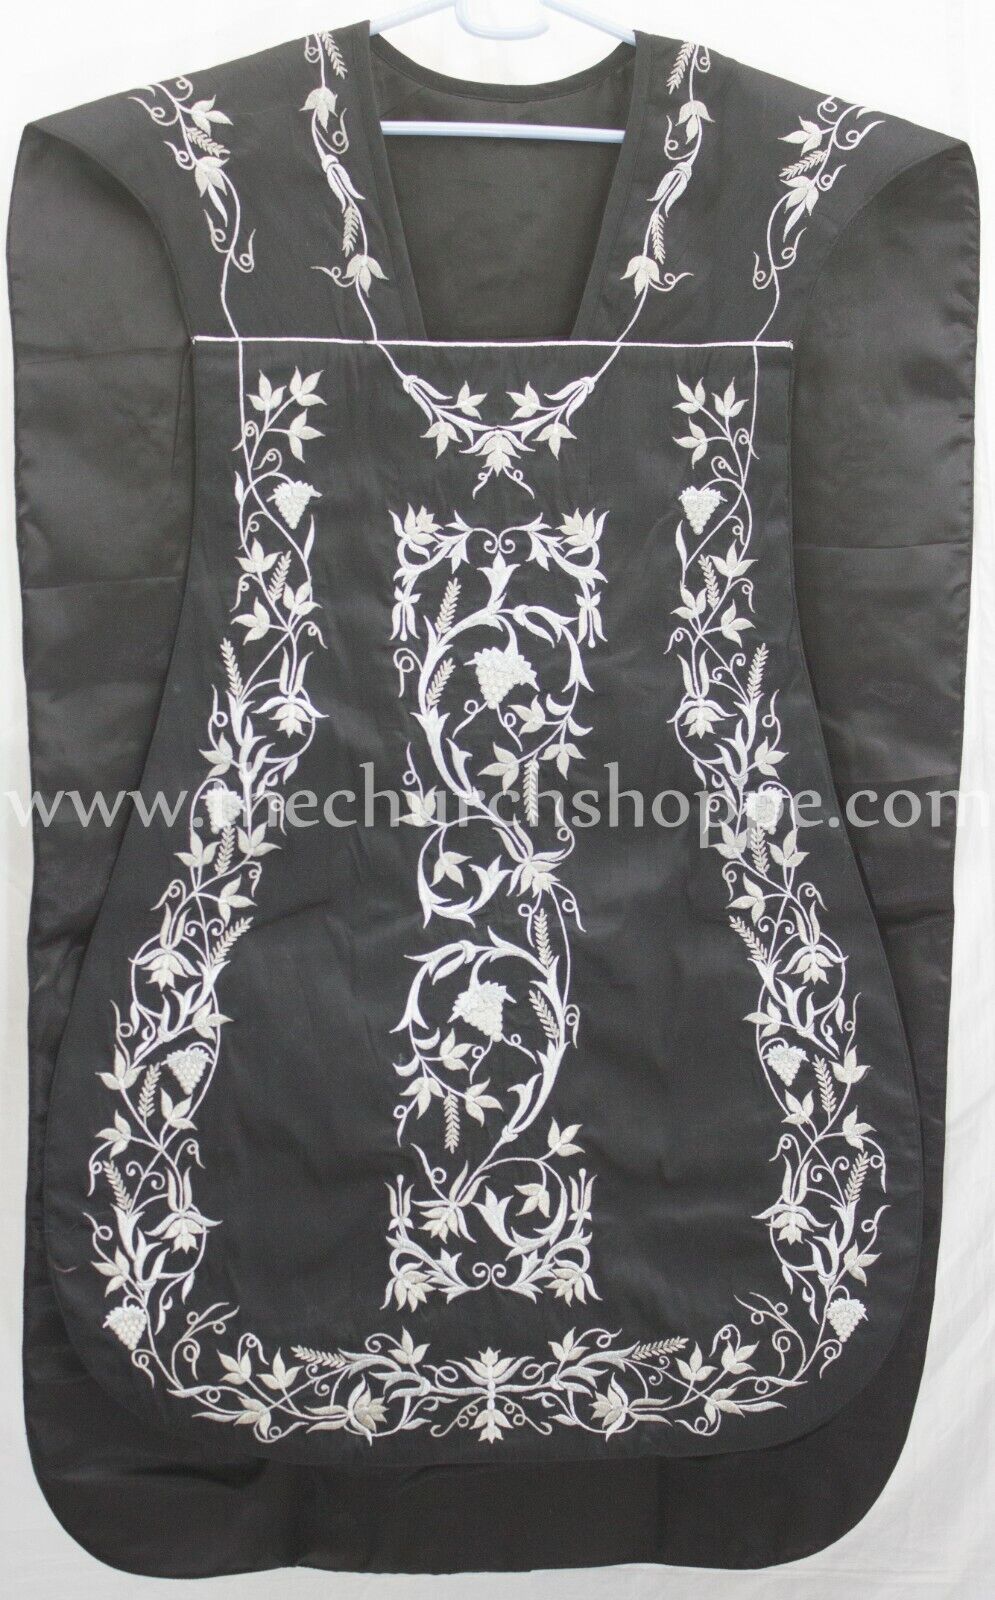 BLACK Roman Chasuble Fiddleback Vestment & 5 pcs mass set IHS embroidery,FELT 